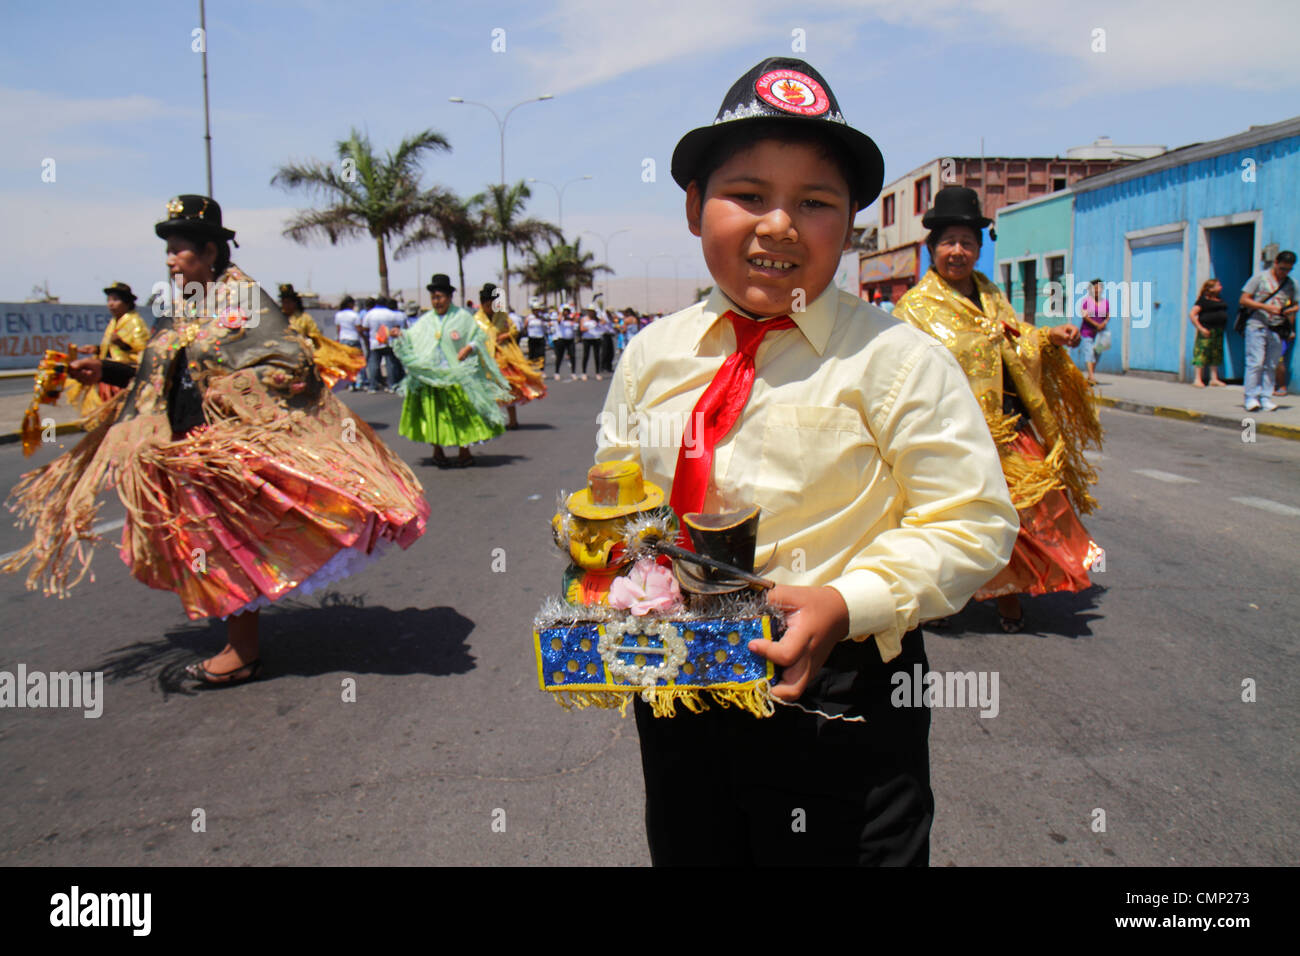 Arica Chile,Avenida Pedro Montt,Carnaval Andino,Andean Carnival,parade,rehearsal,indigenous,Aymara heritage,folklore traditional dance,troupe,Hispanic Stock Photo